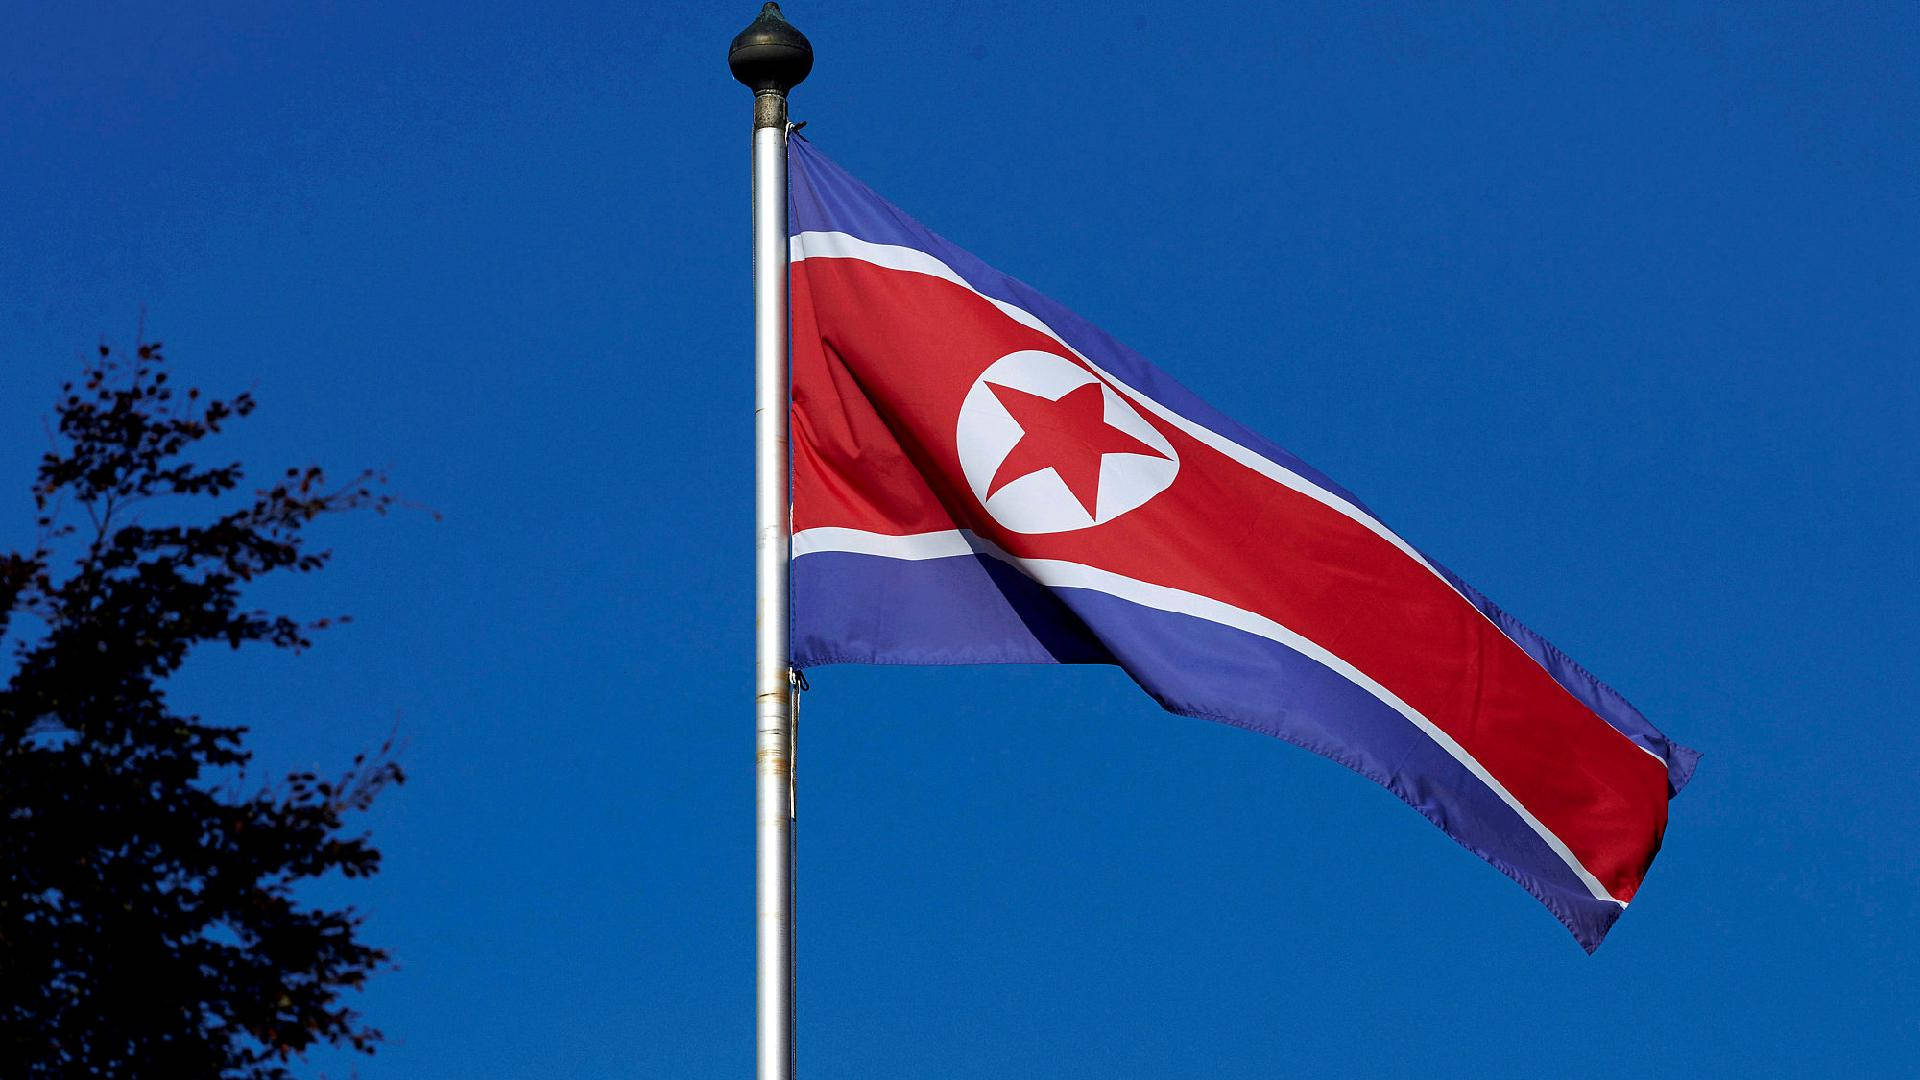 North Korea Flag With Tree Behind